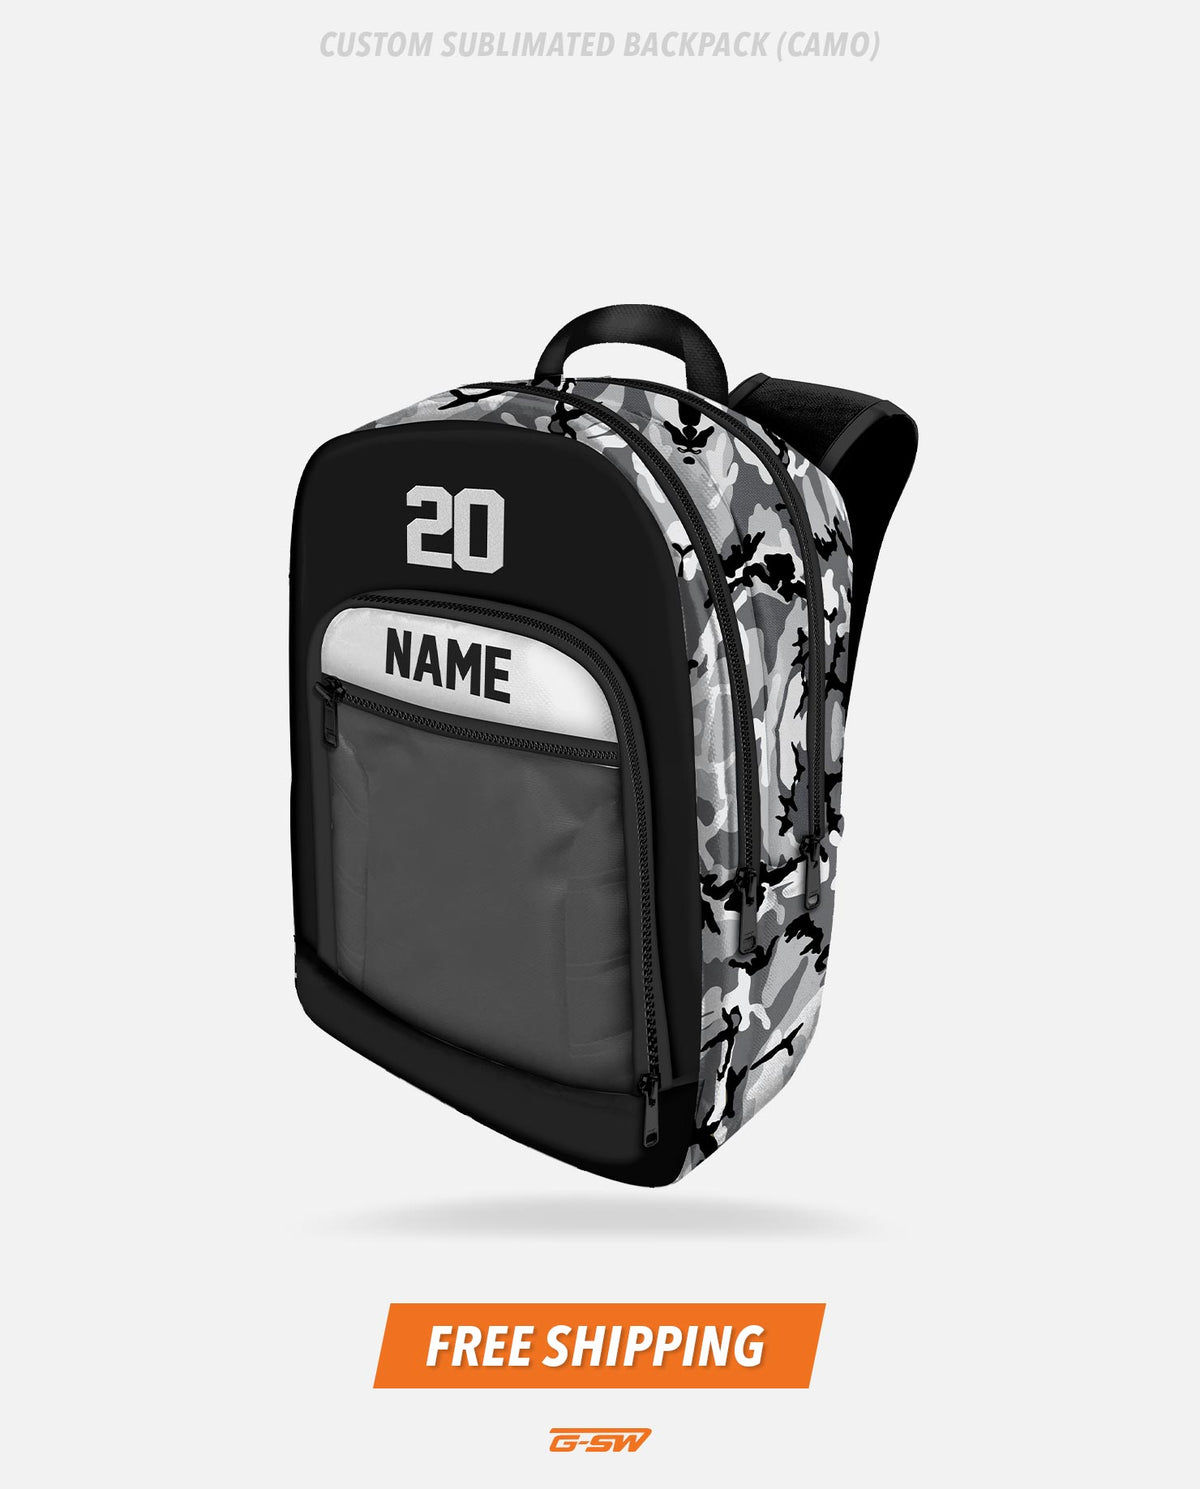 GSW Custom Sublimated Backpack (Camo)